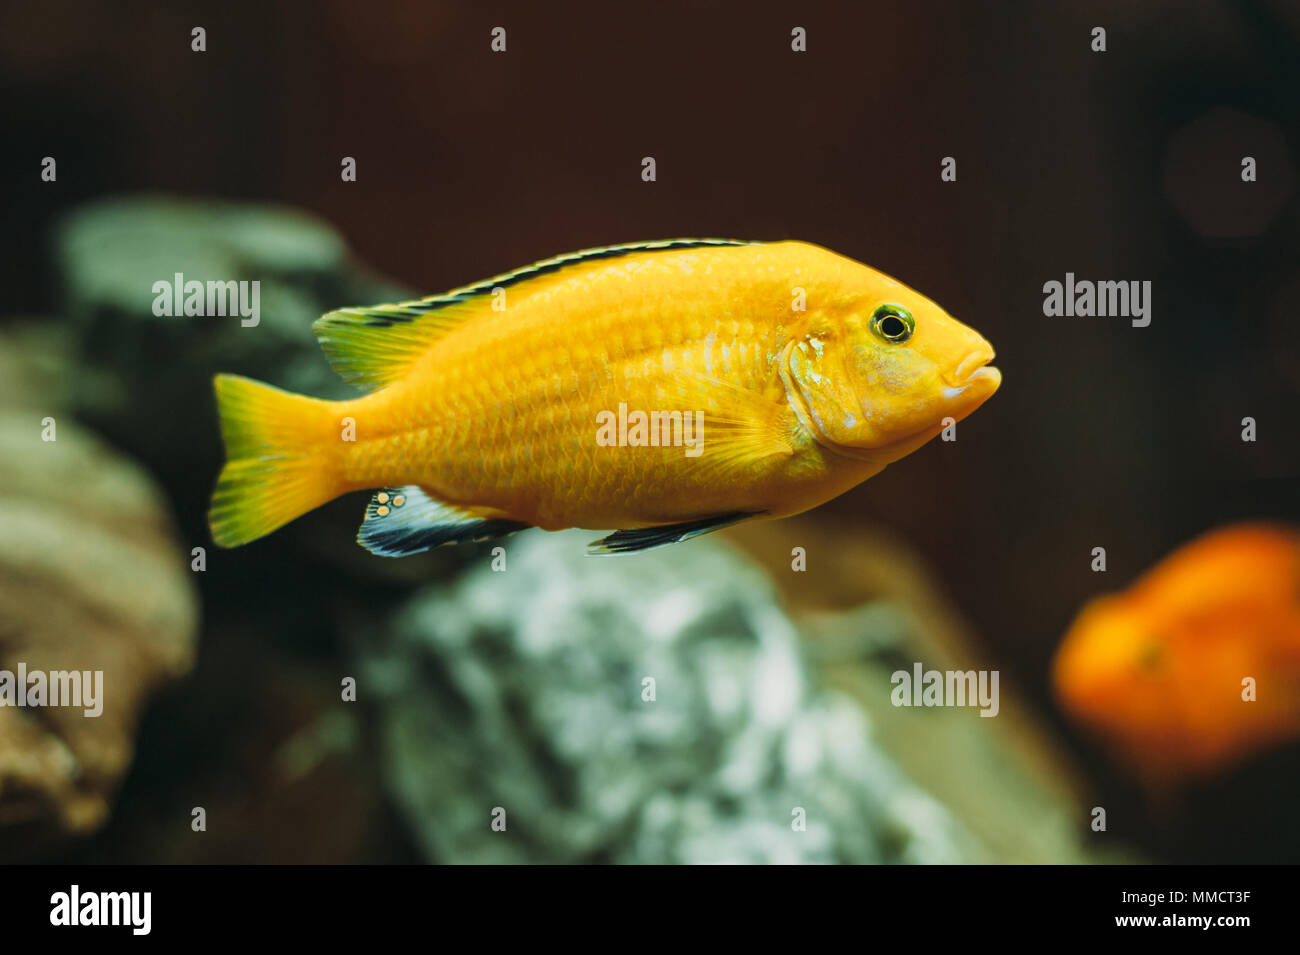 Aquarium yellow fish - Labidochromis caeruleus Stock Photo